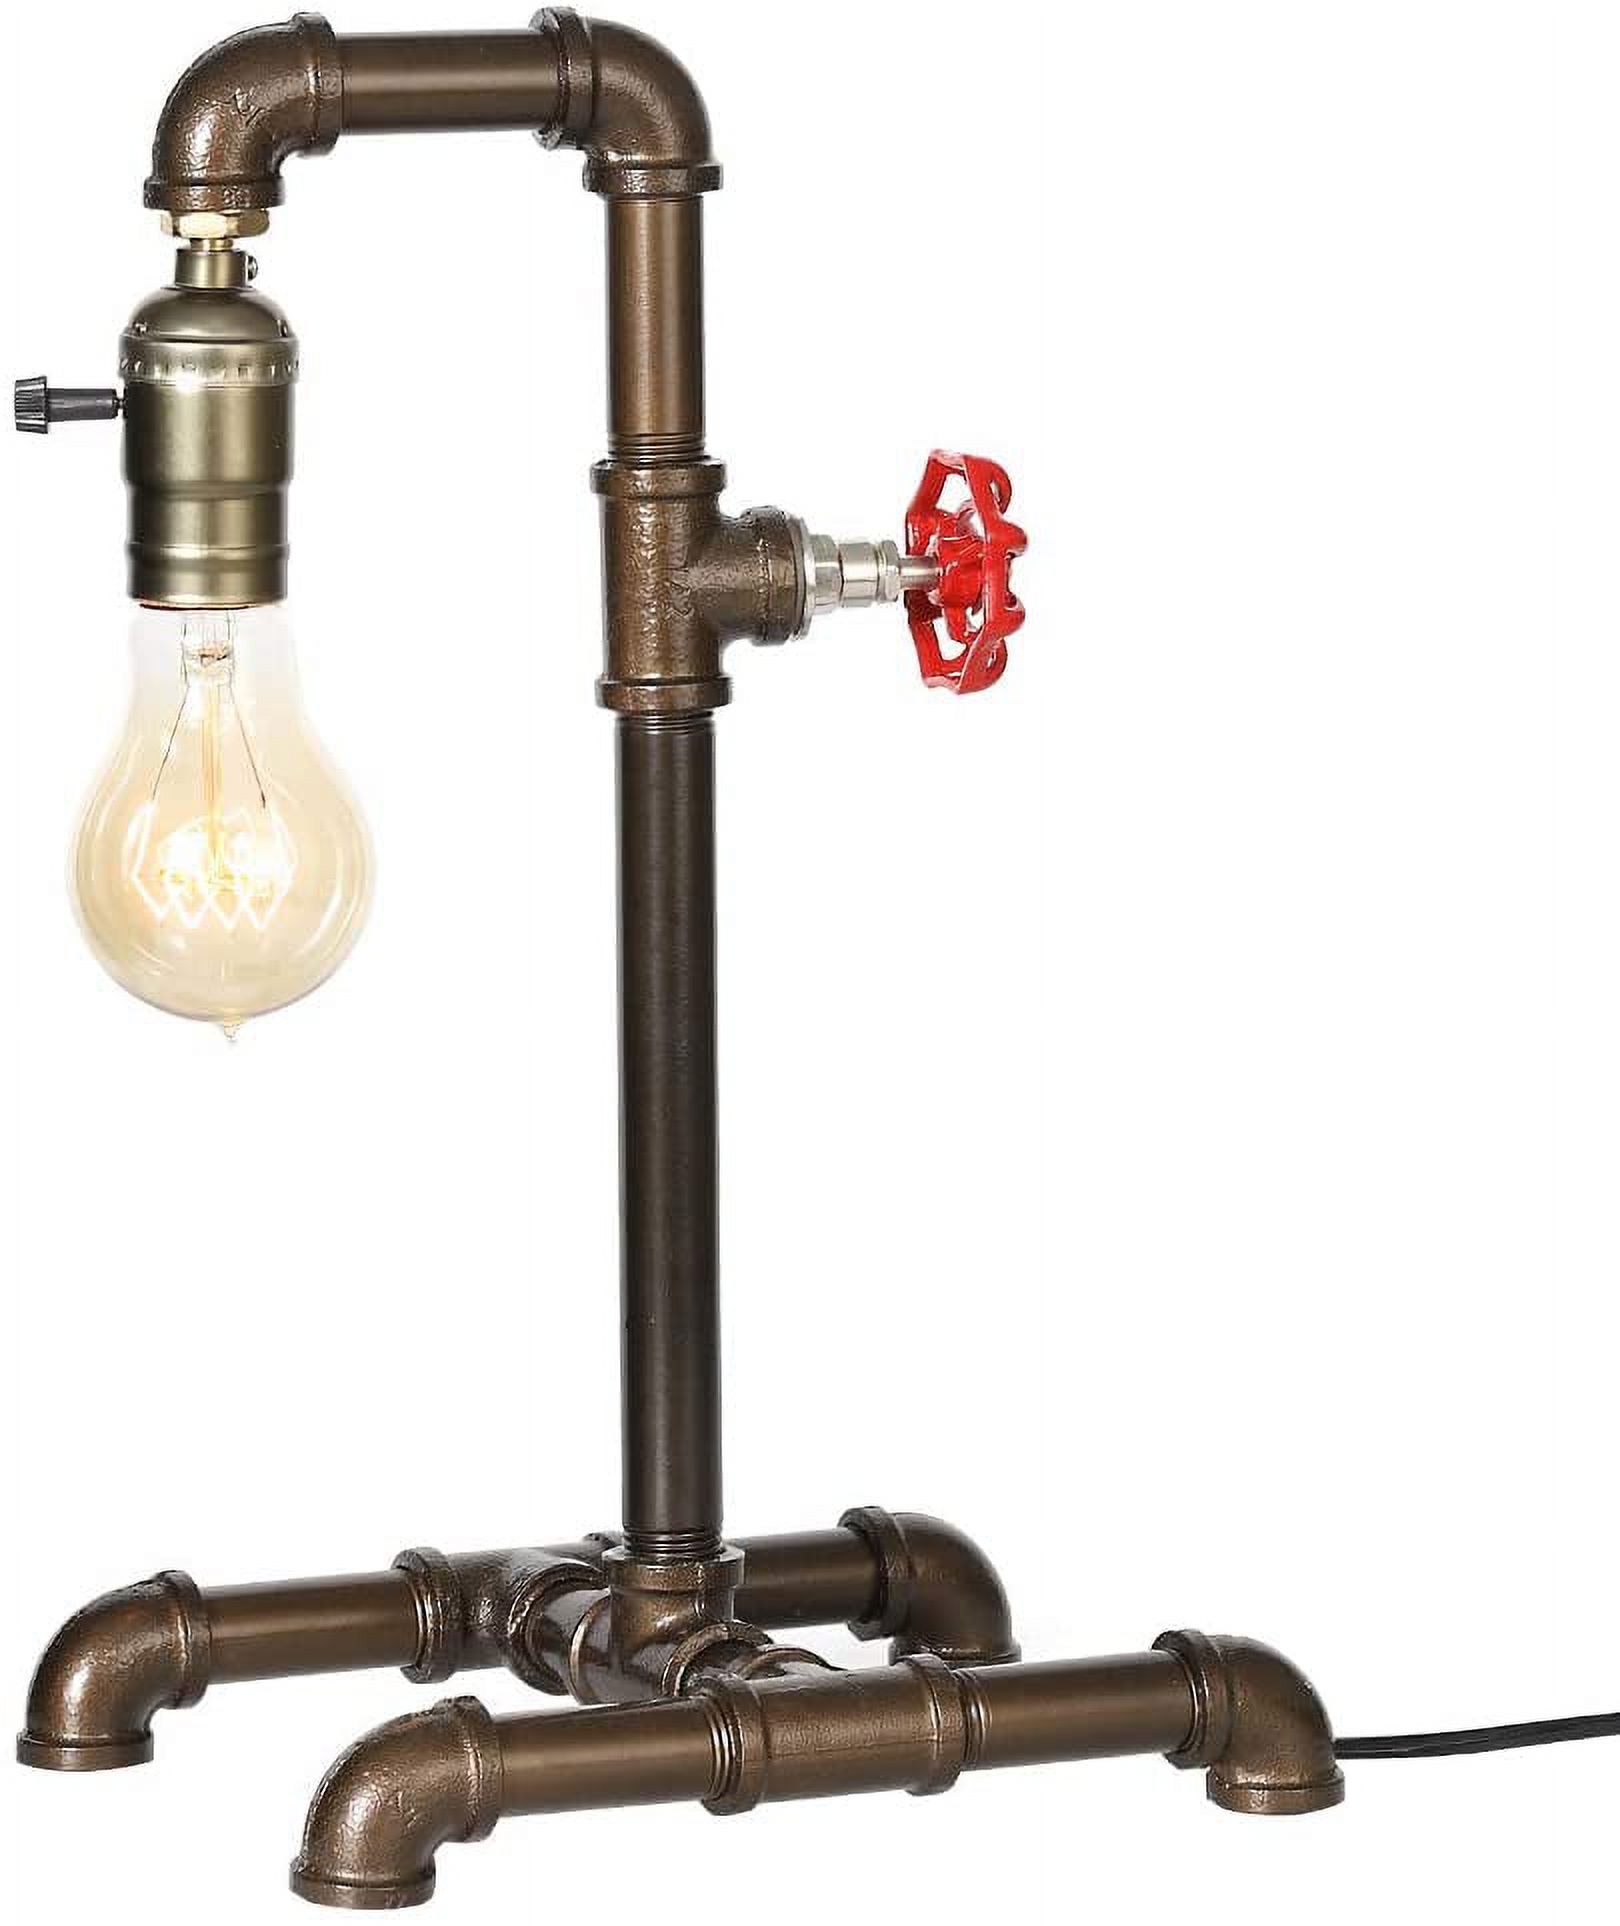 Retro Table Lamp, Industrial Steam Punk Lamp, Loft Style Rustic Bronze Metal Lighting, Pipe Desk Lamp - image 5 of 7